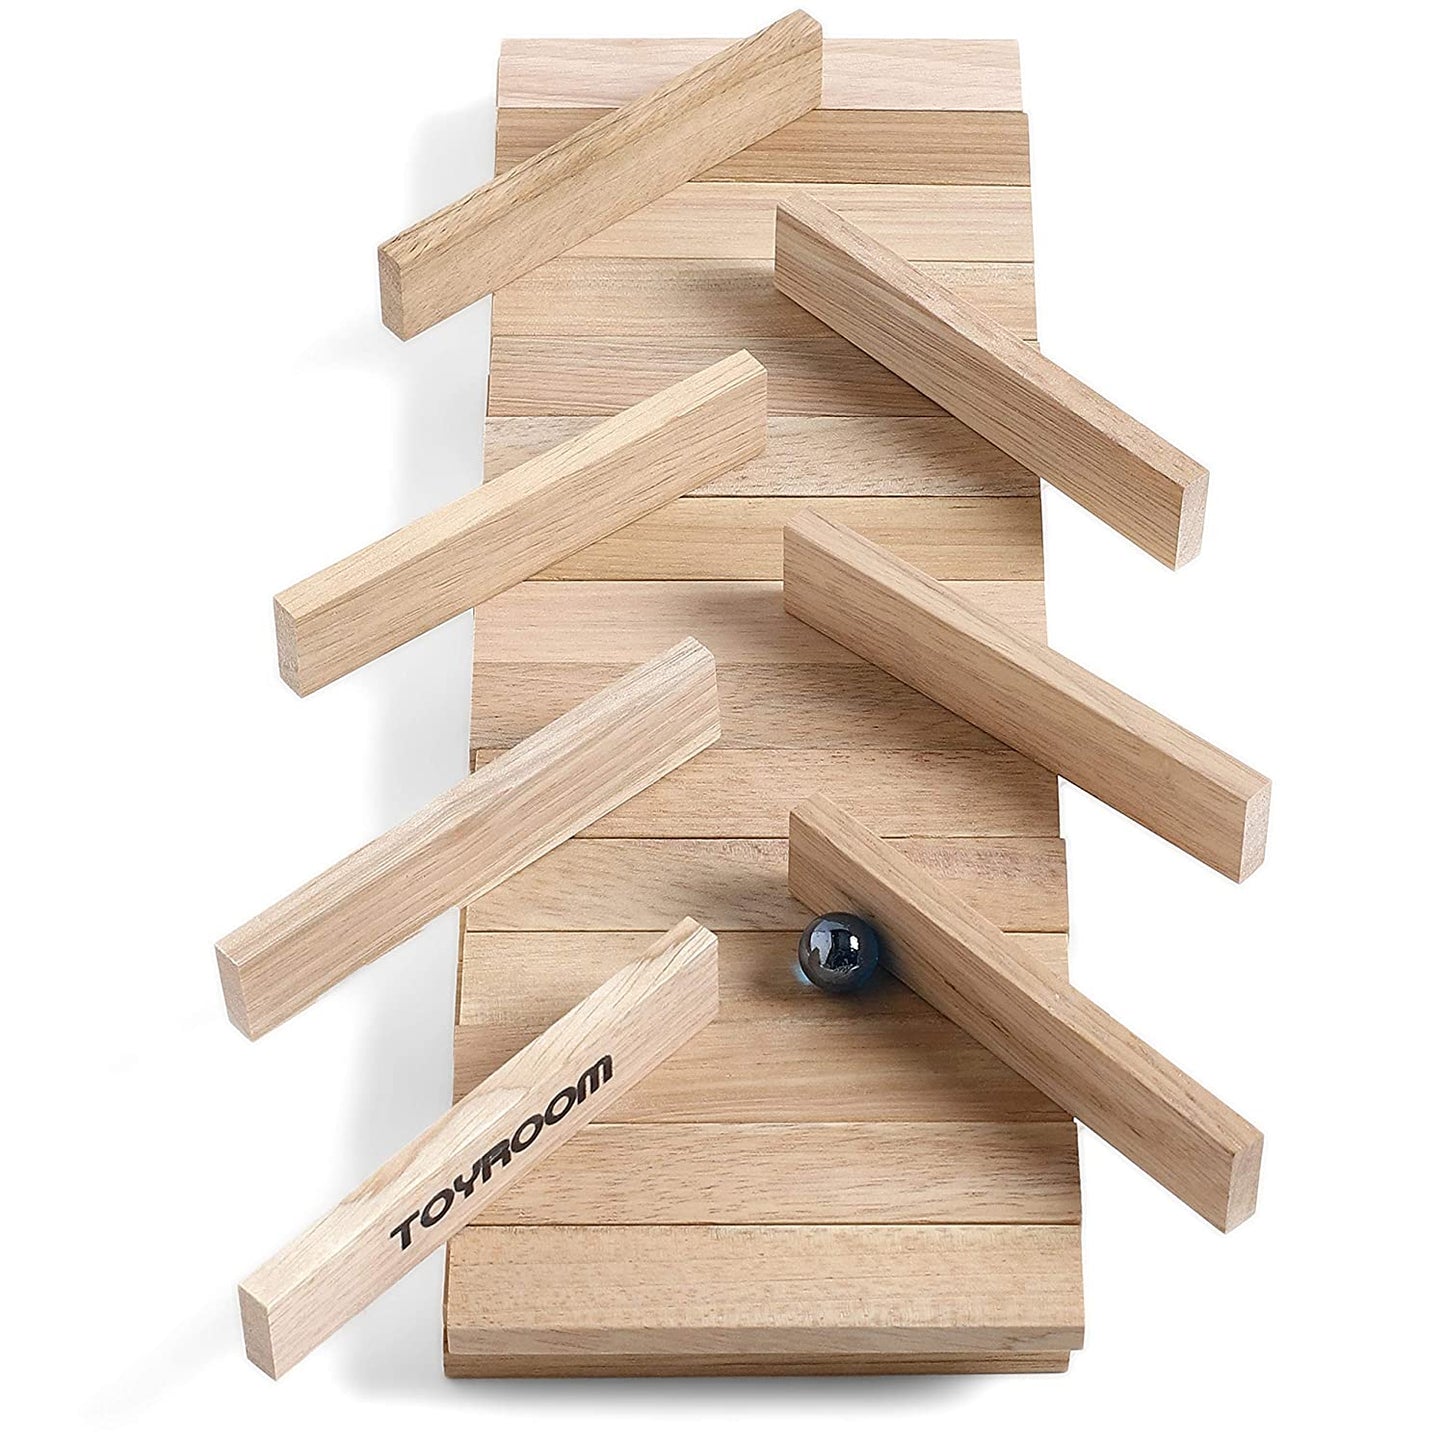 Wooden  Planks / Building Bricks (50 Pieces)